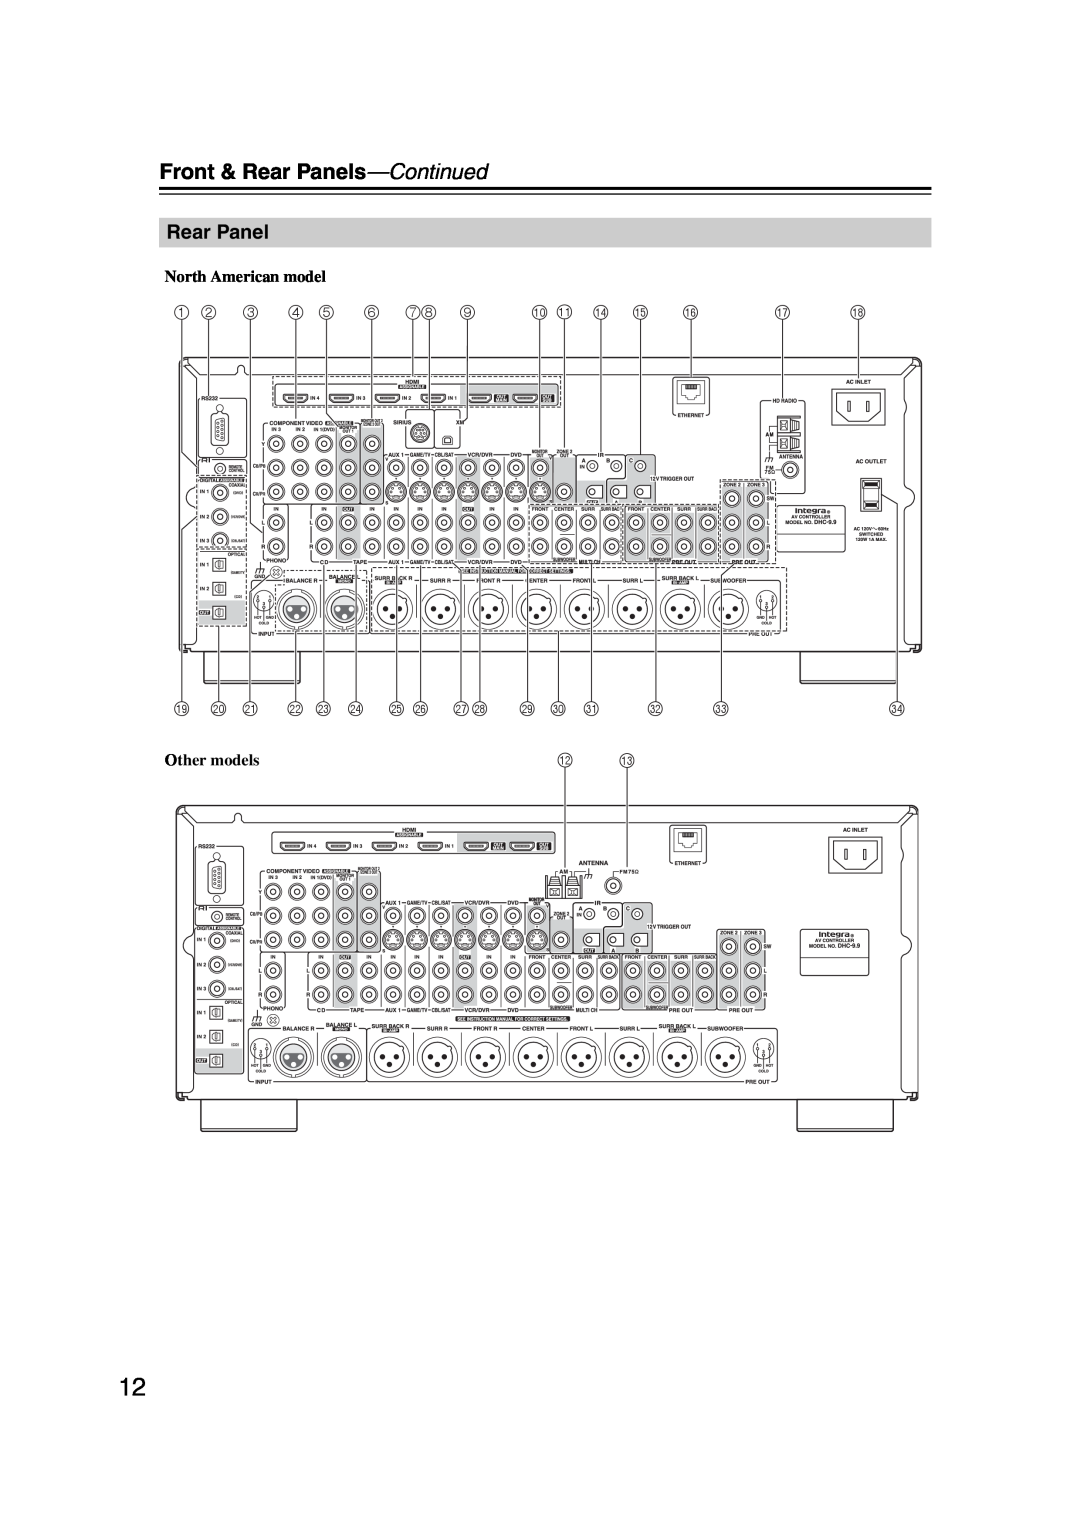 Integra DHC-9.9 instruction manual Front & Rear Panels—Continued, 1 2 3 4 5 6, bk bl bo bp bq, crcs 